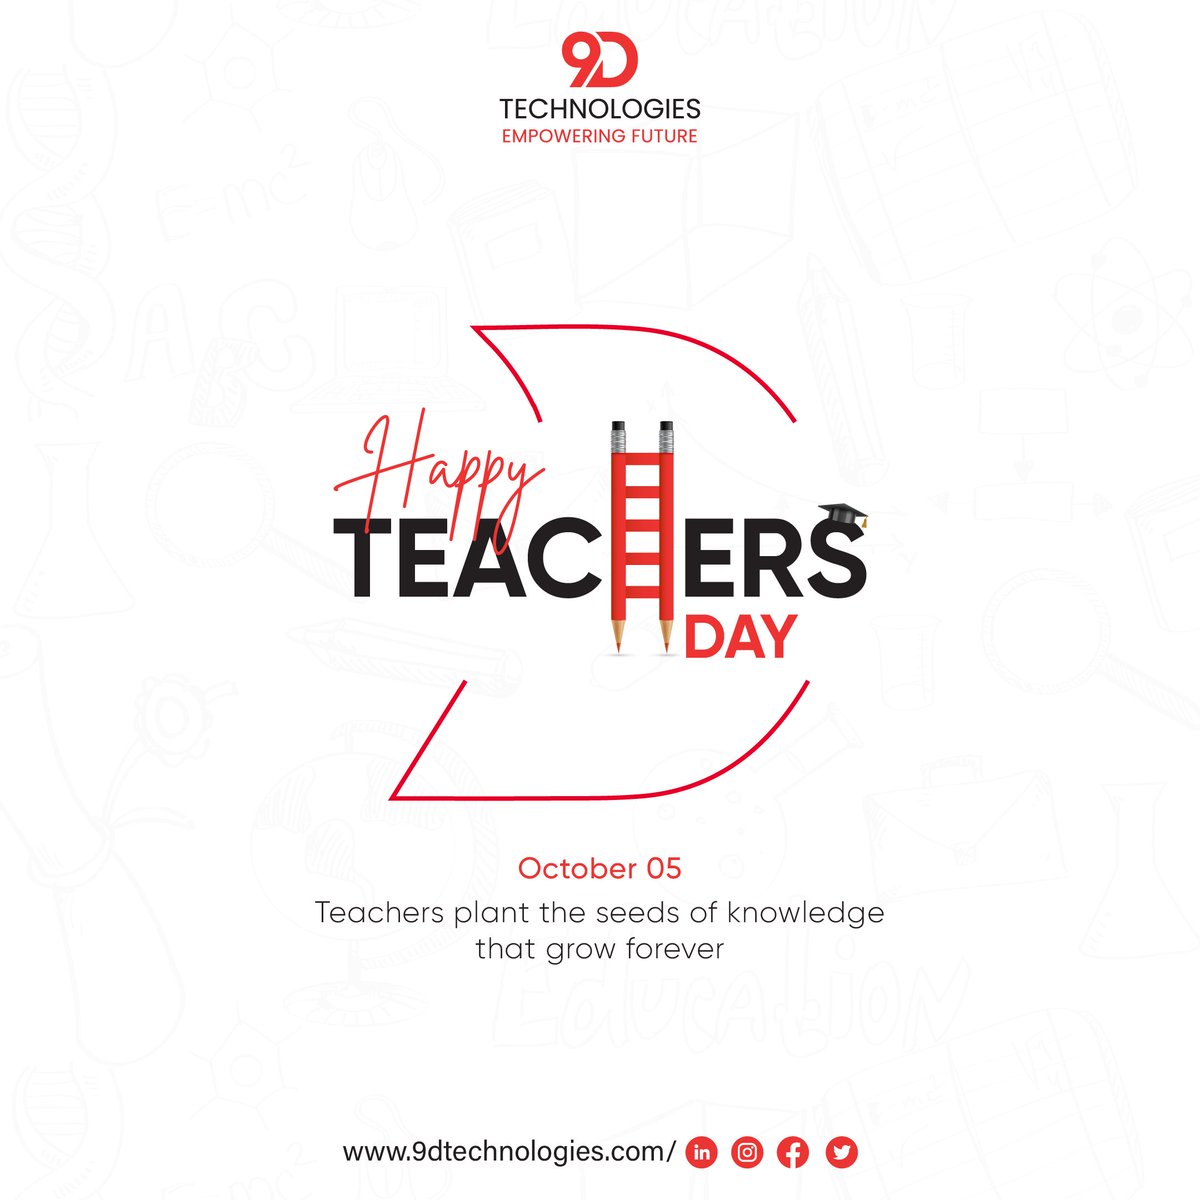 Today, we honor those who ignite the flames of curiosity and knowledge within us.
Happy Teacher's Day! 🔥📚

#HappyTeachersDay #TeacherAppreciation #ThankYouTeachers
#InspiringEducators #TeacherLove #Educators #TeachingMatters
#TeacherHeroes #9dtechnologies #9d